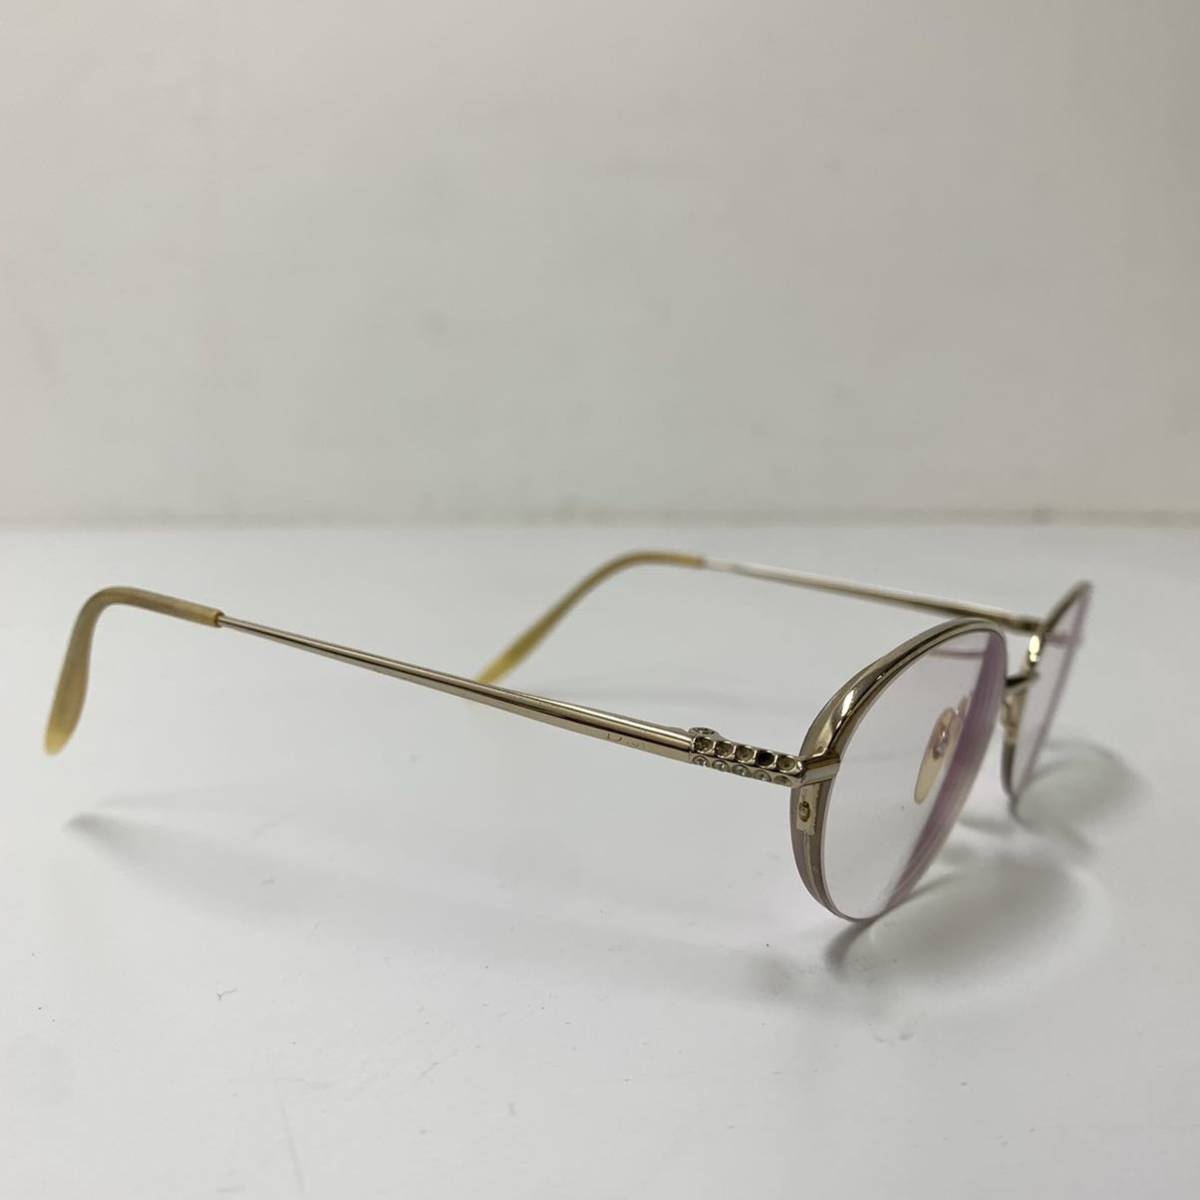 VINTAGE Dior очки очки I одежда TITAN-P metal рама рама раз ввод Vintage Dior [ letter pack почтовый сервис плюс отправка по почте возможно ]#3